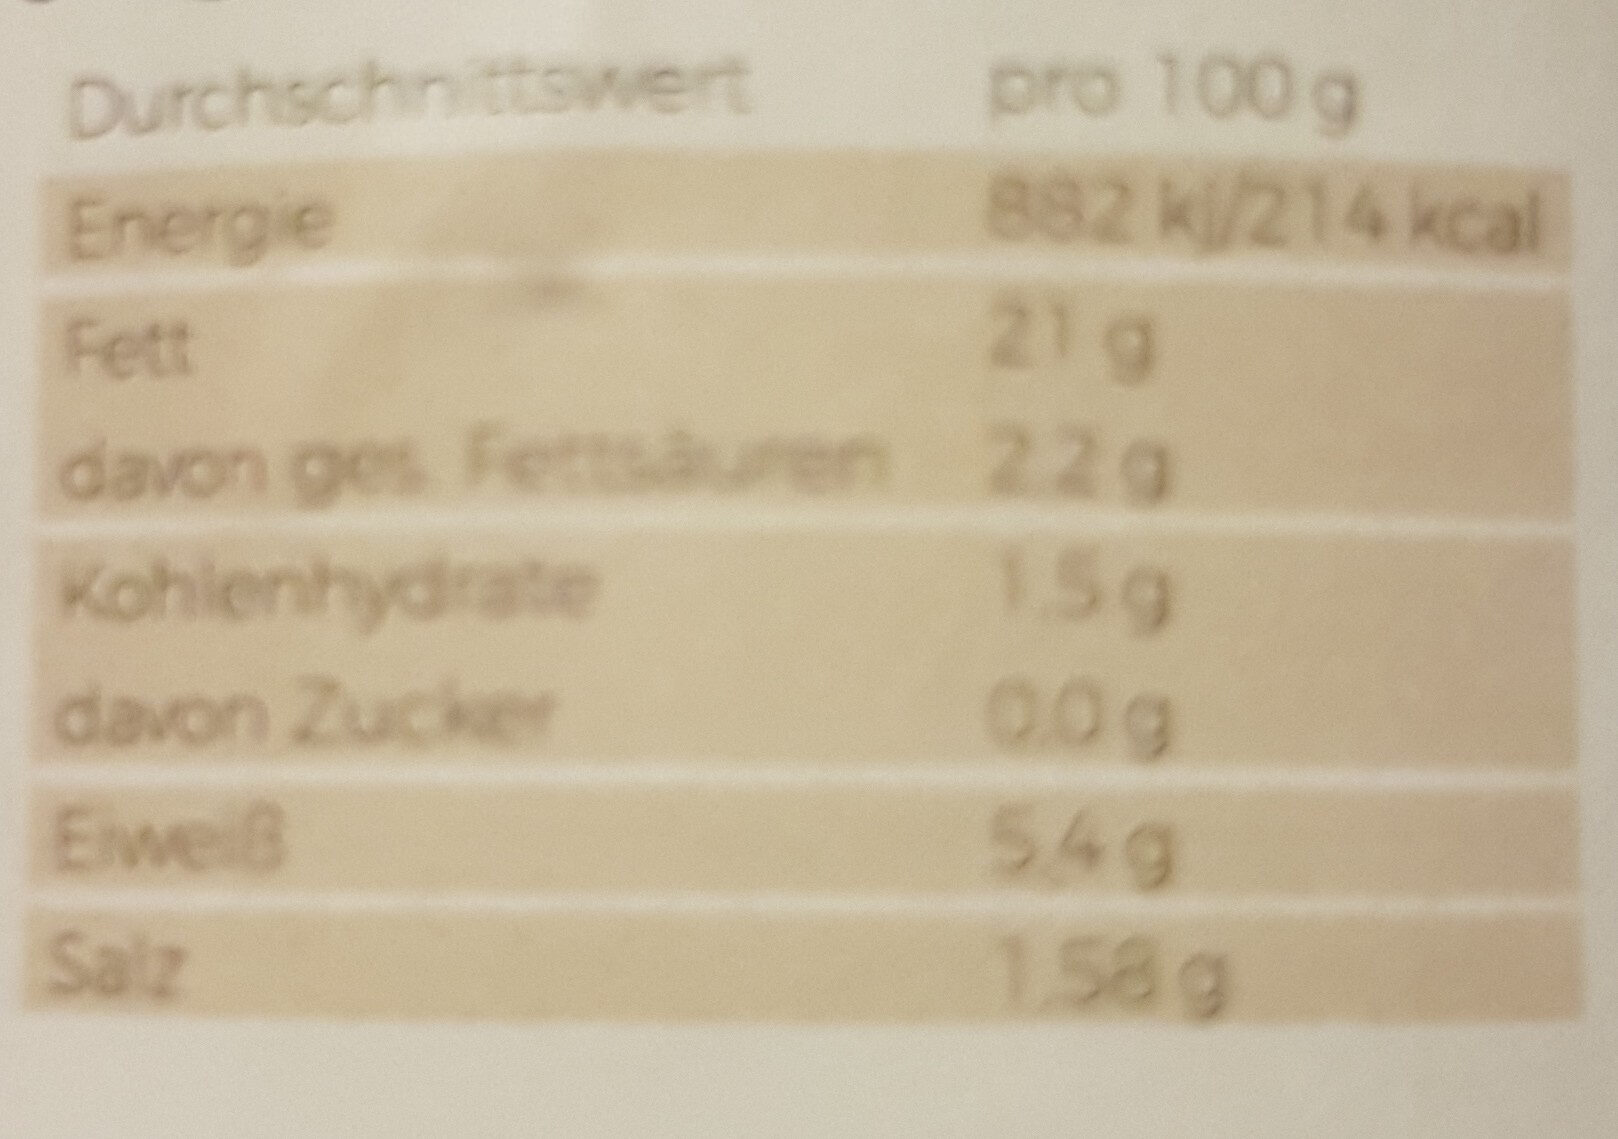 Pilzkiste Premium Austernpilzcreme - Nährwertangaben